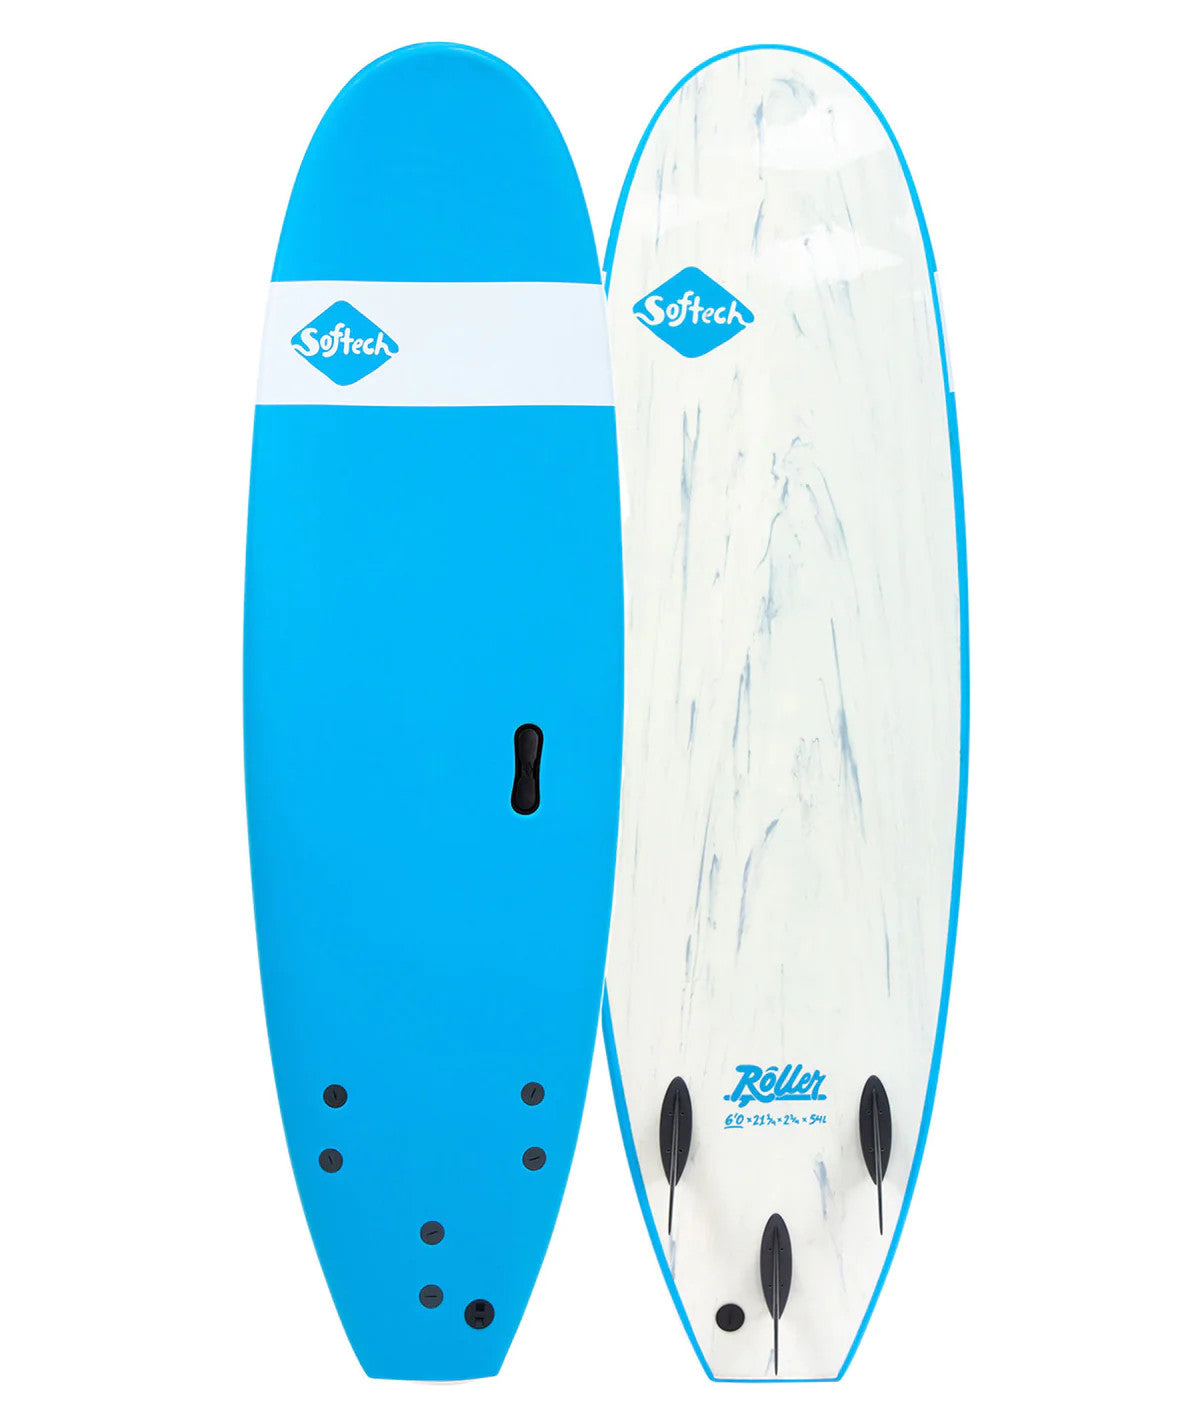 Softech Roller Soft Surfboard Blue 7ft0in